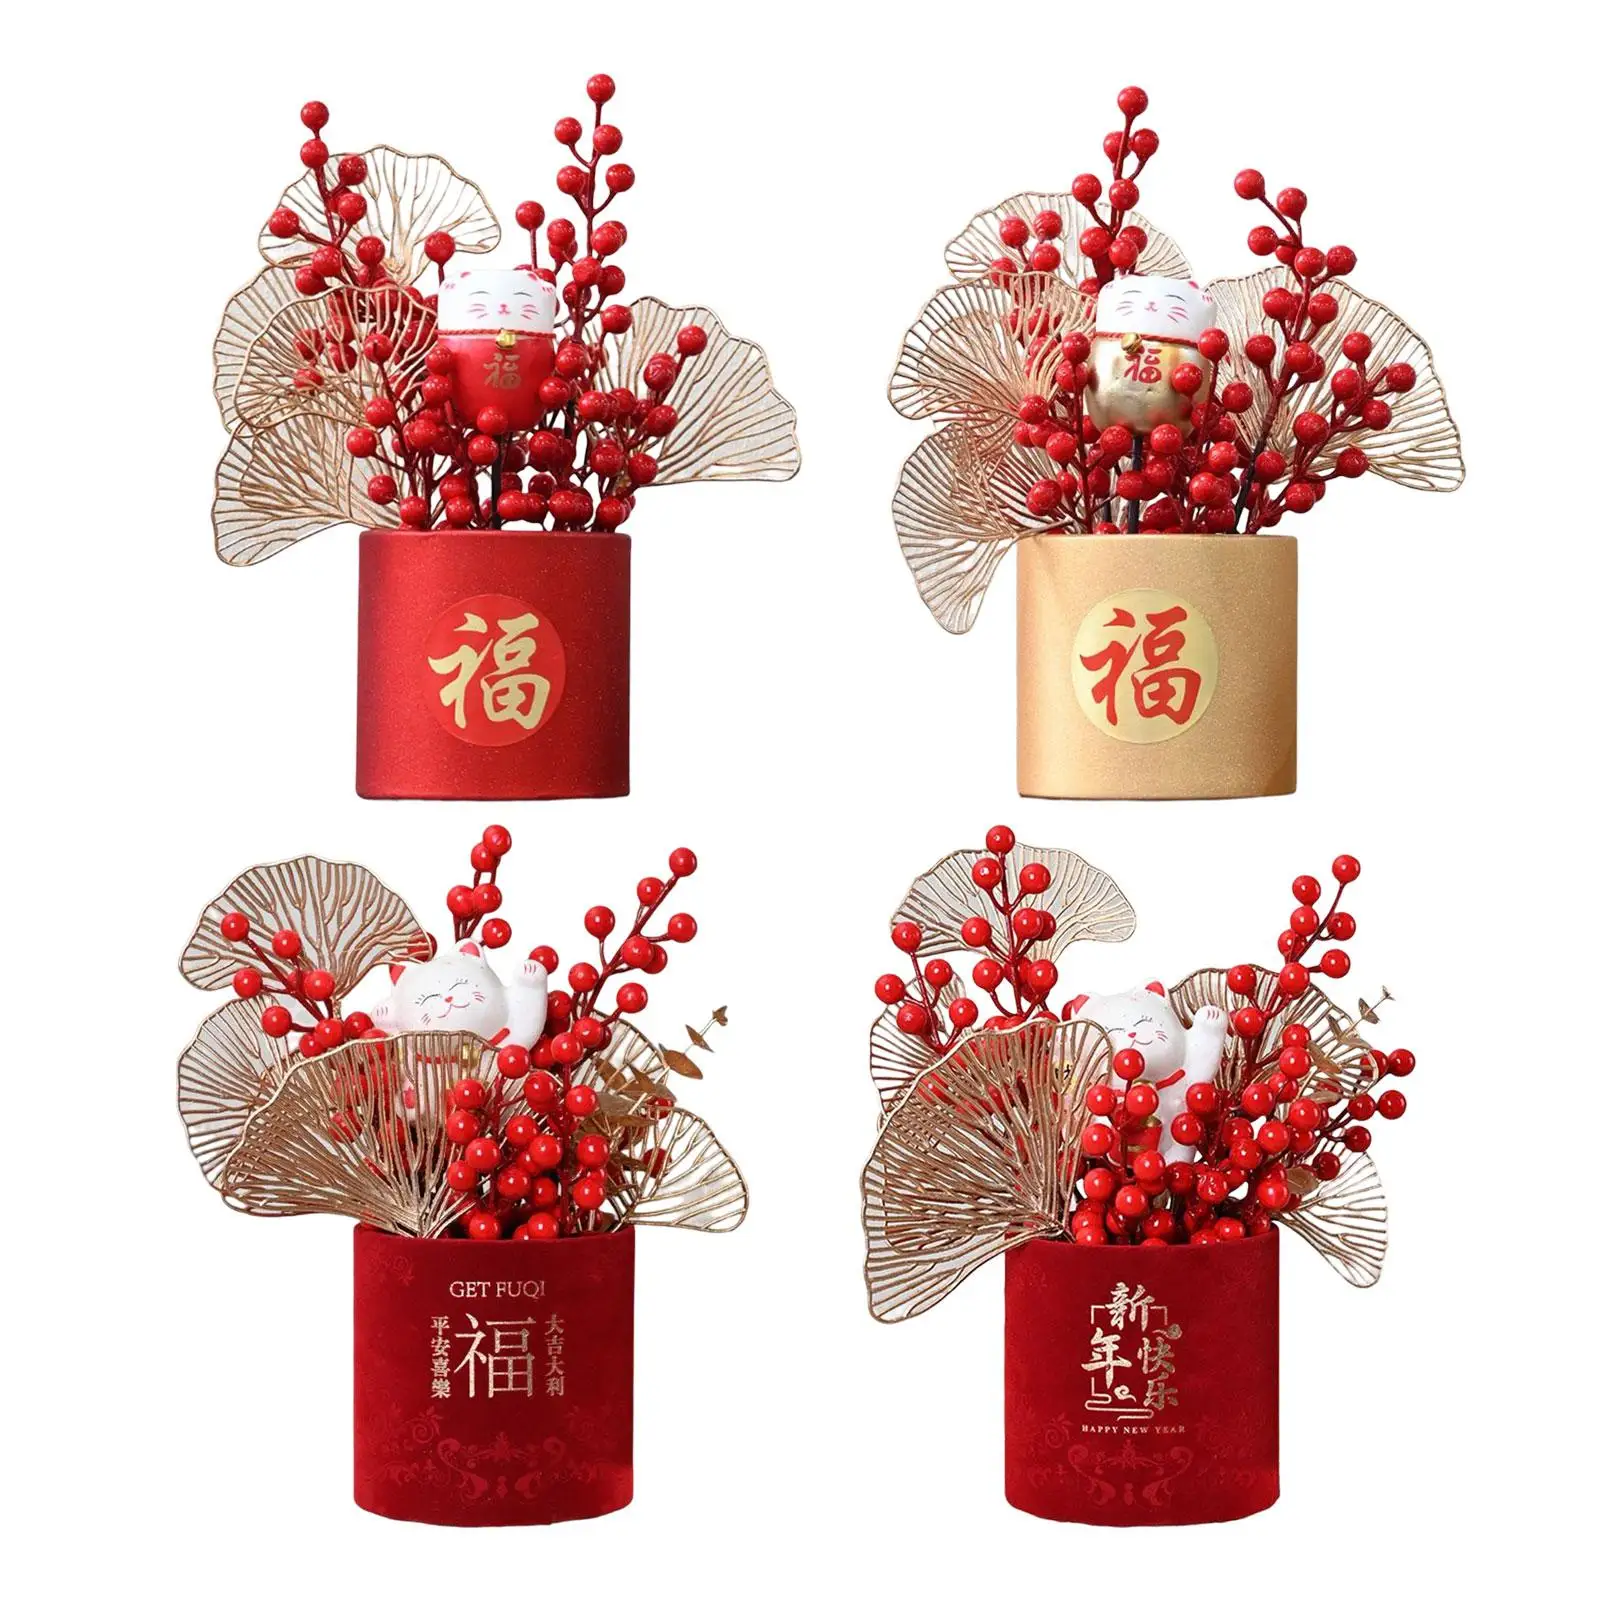 Chinese style flower basket, floral arrangements, celebrations, photo props,